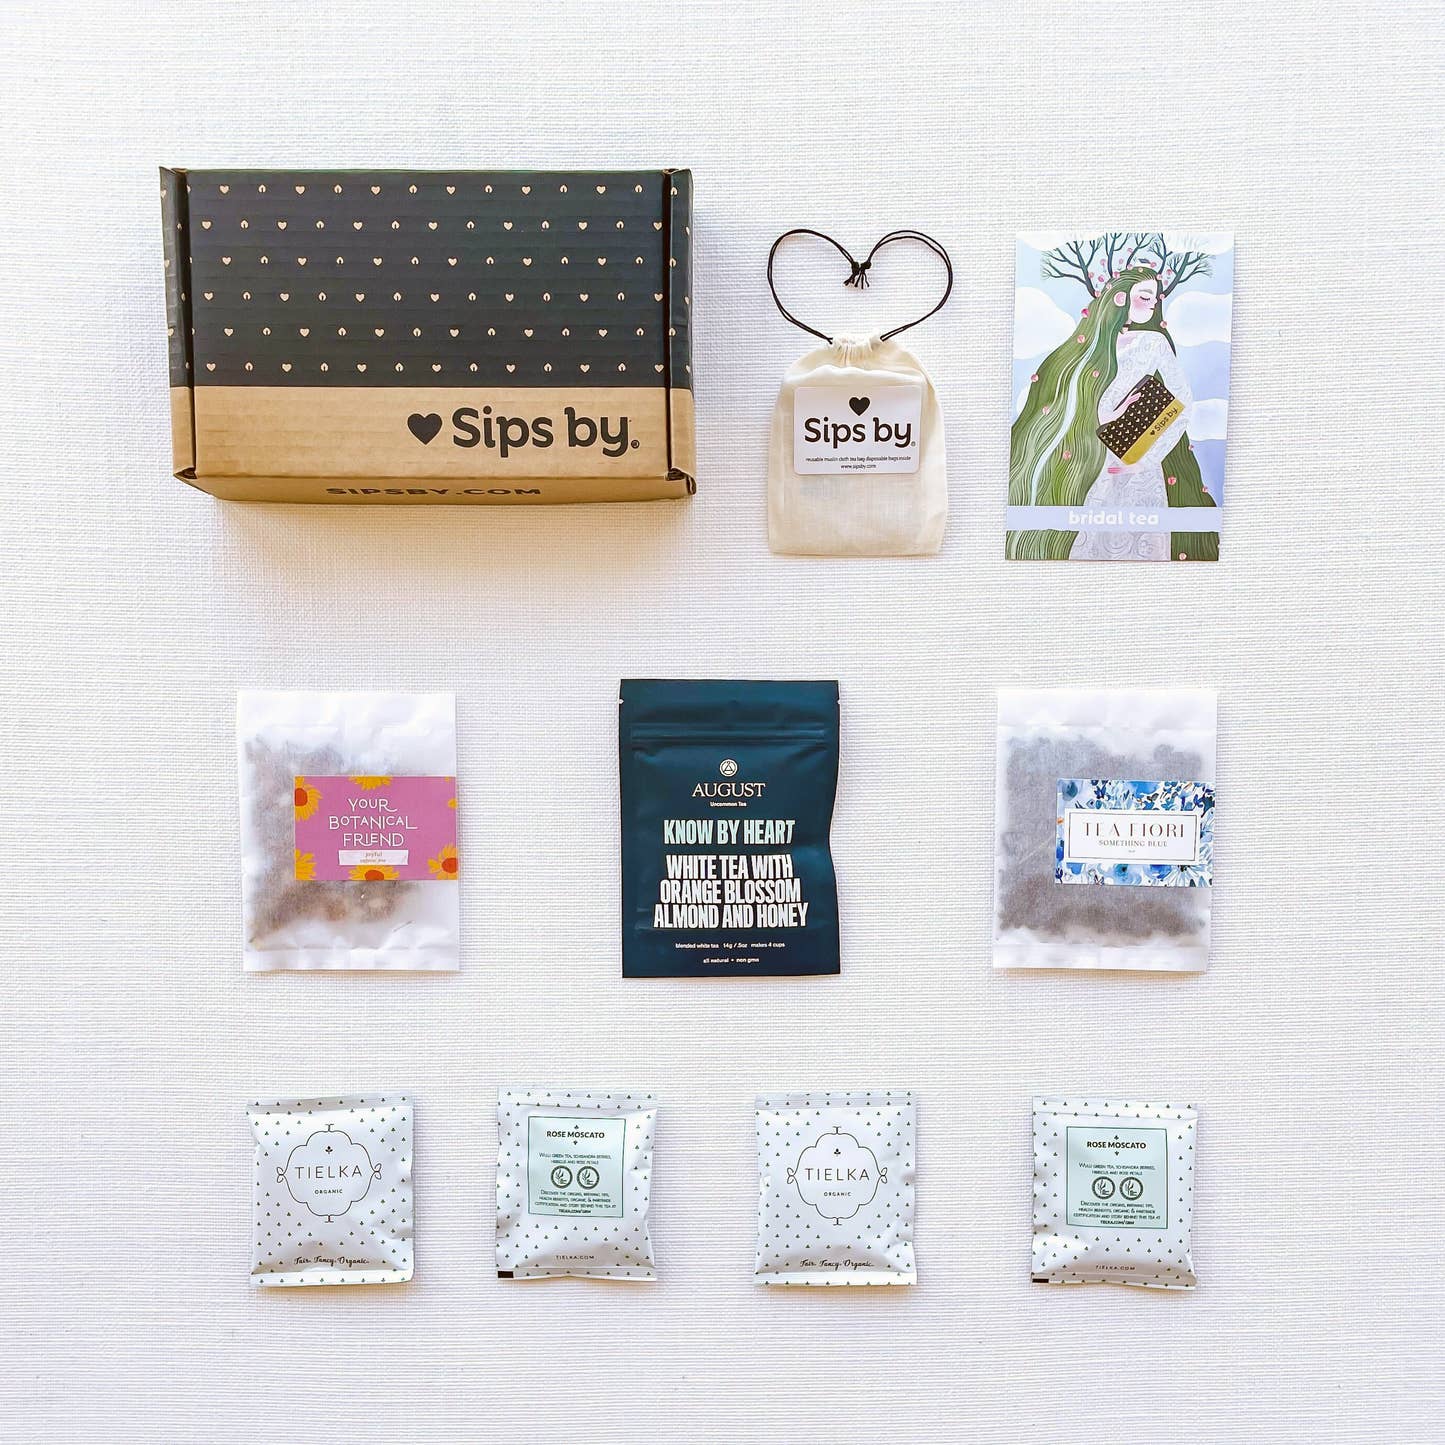 Bridal Tea Box with Sips by Box, Bridal Tea Box illustrated postcard, tea bag kit, and four loose leaf teas